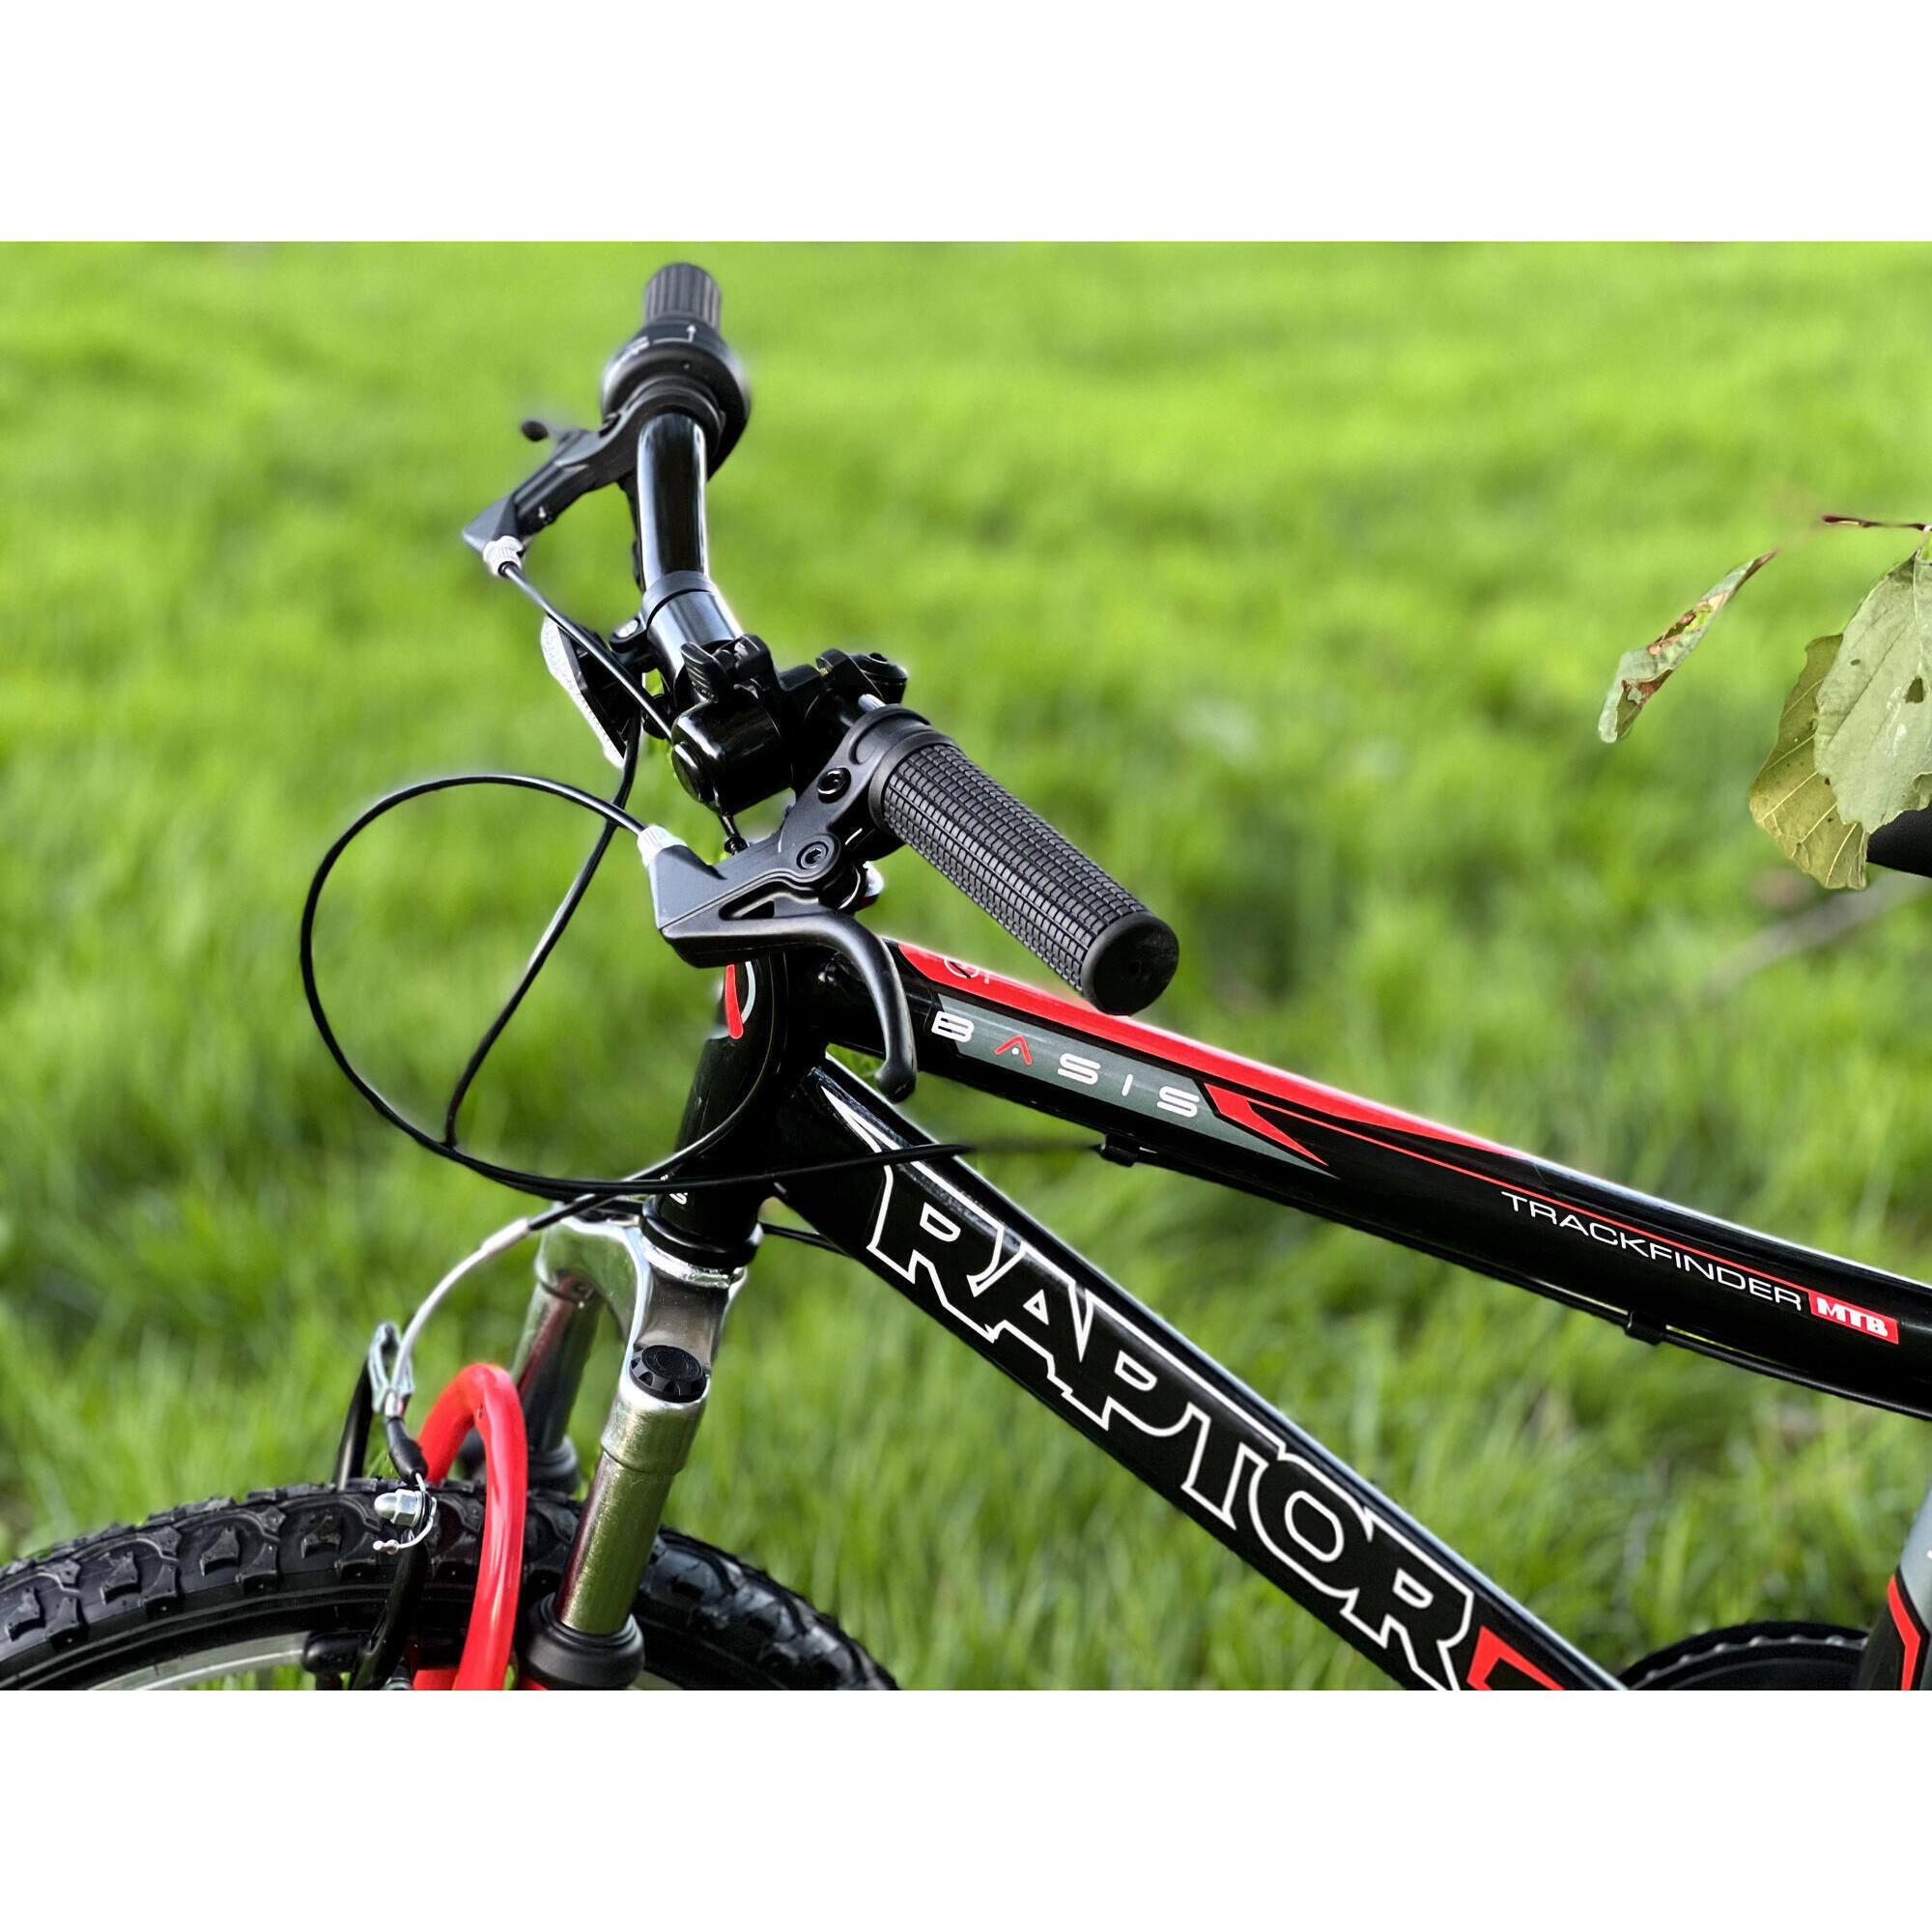 Basis Raptor Junior Hardtail Mountain Bike 20in Wheel - Gloss Black/Red 5/5